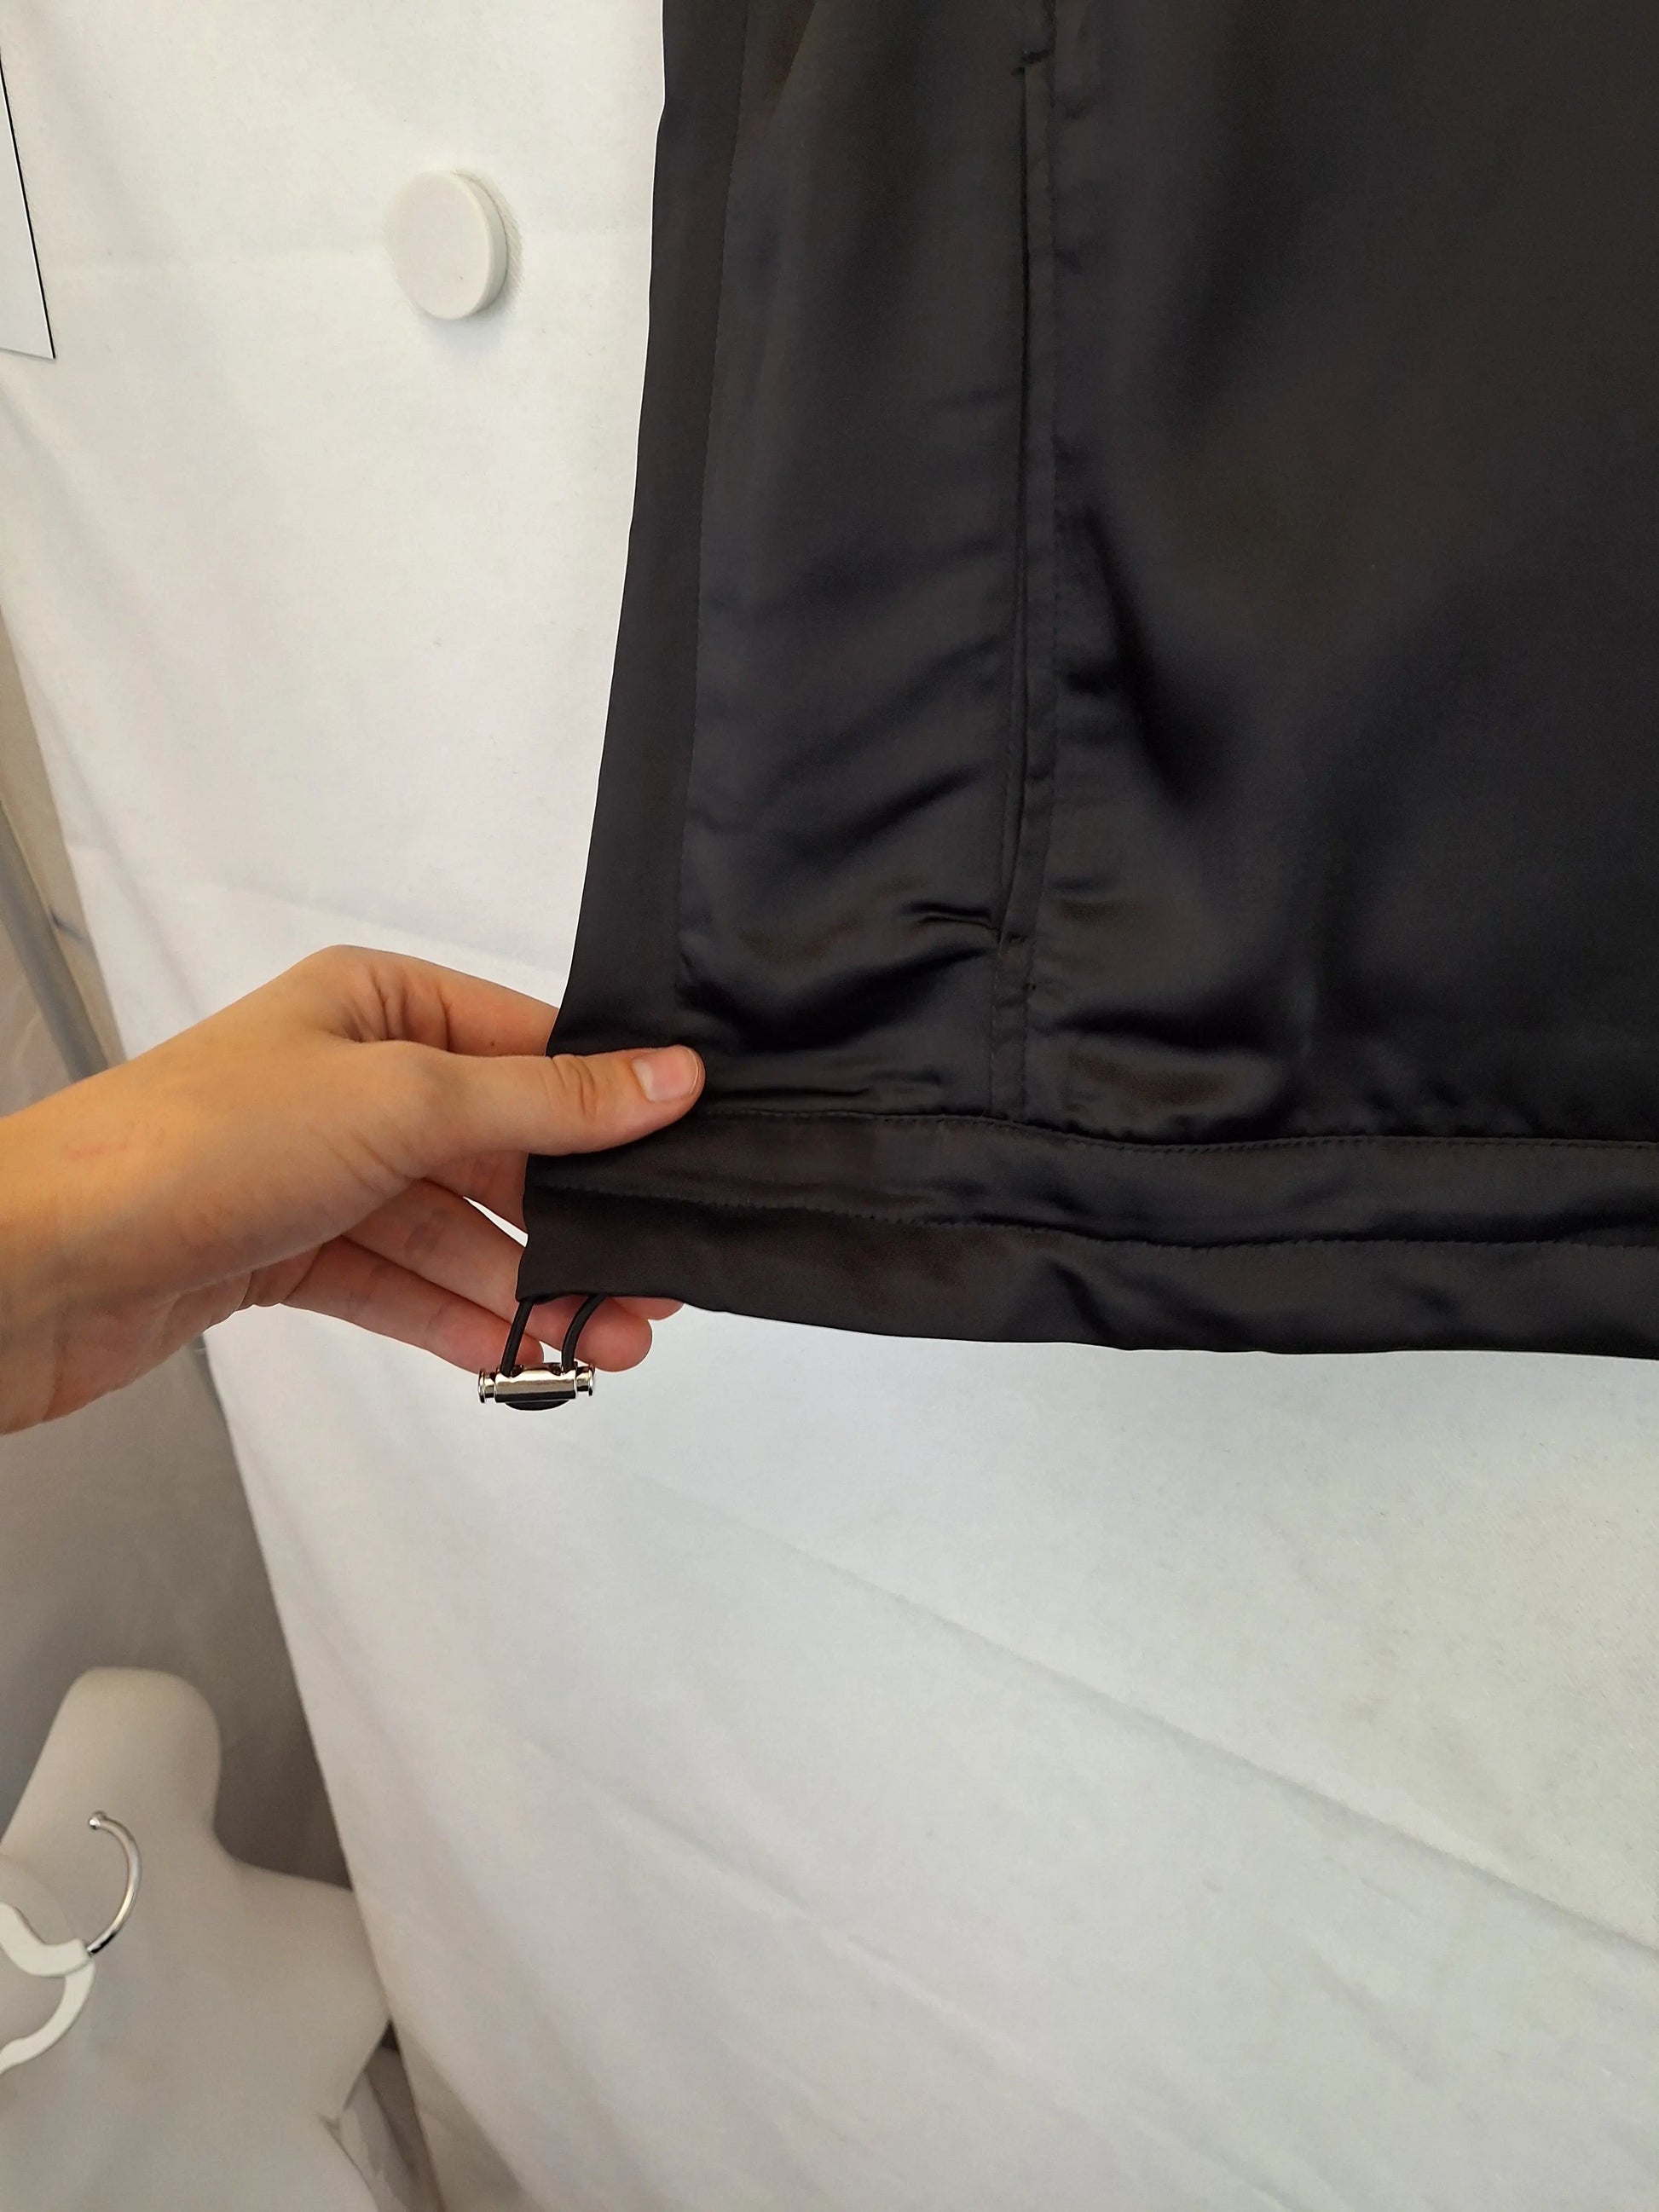 Decjuba Stylish Satin Sleeveless Jacket Size 12 by SwapUp-Online Second Hand Store-Online Thrift Store